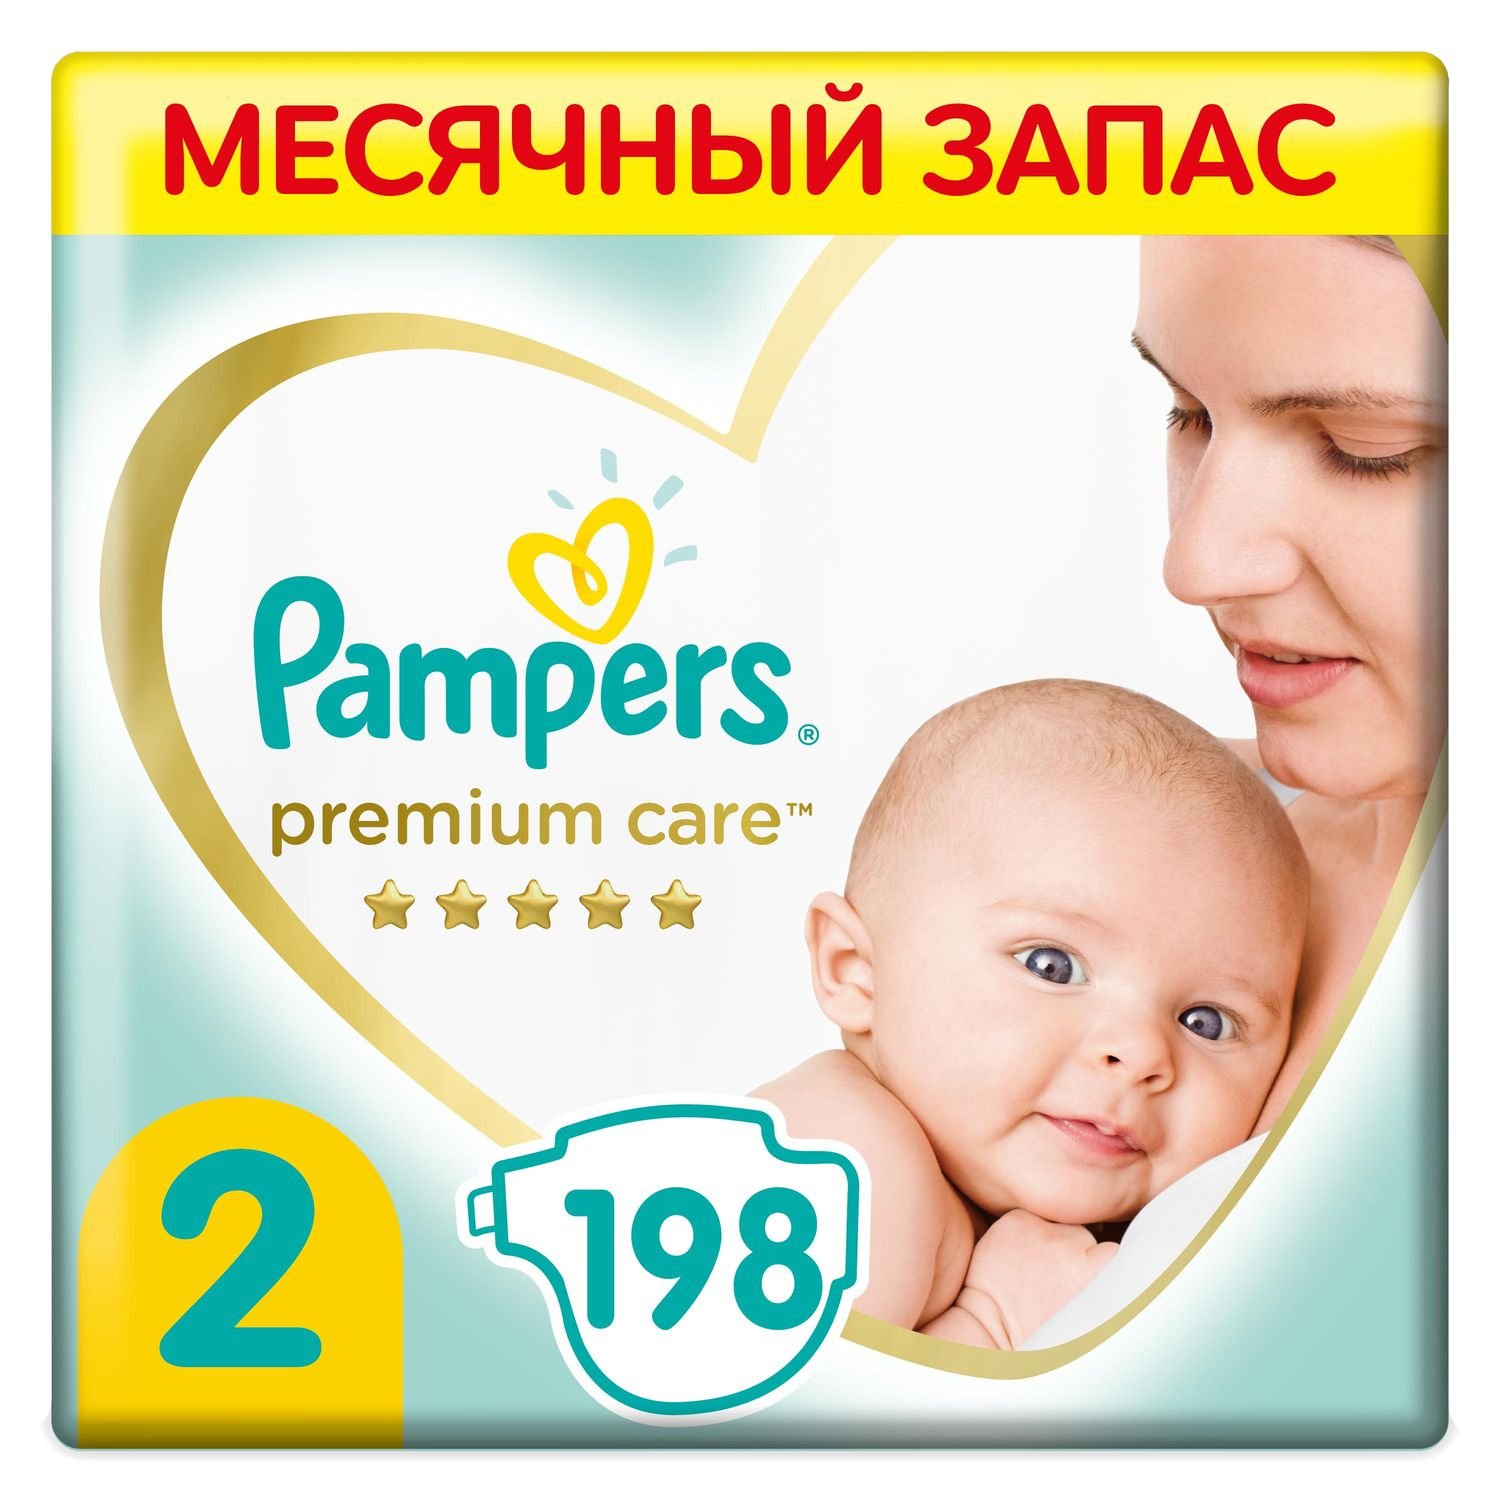 Подгузники Pampers Premium Care 2 4-8кг 198шт